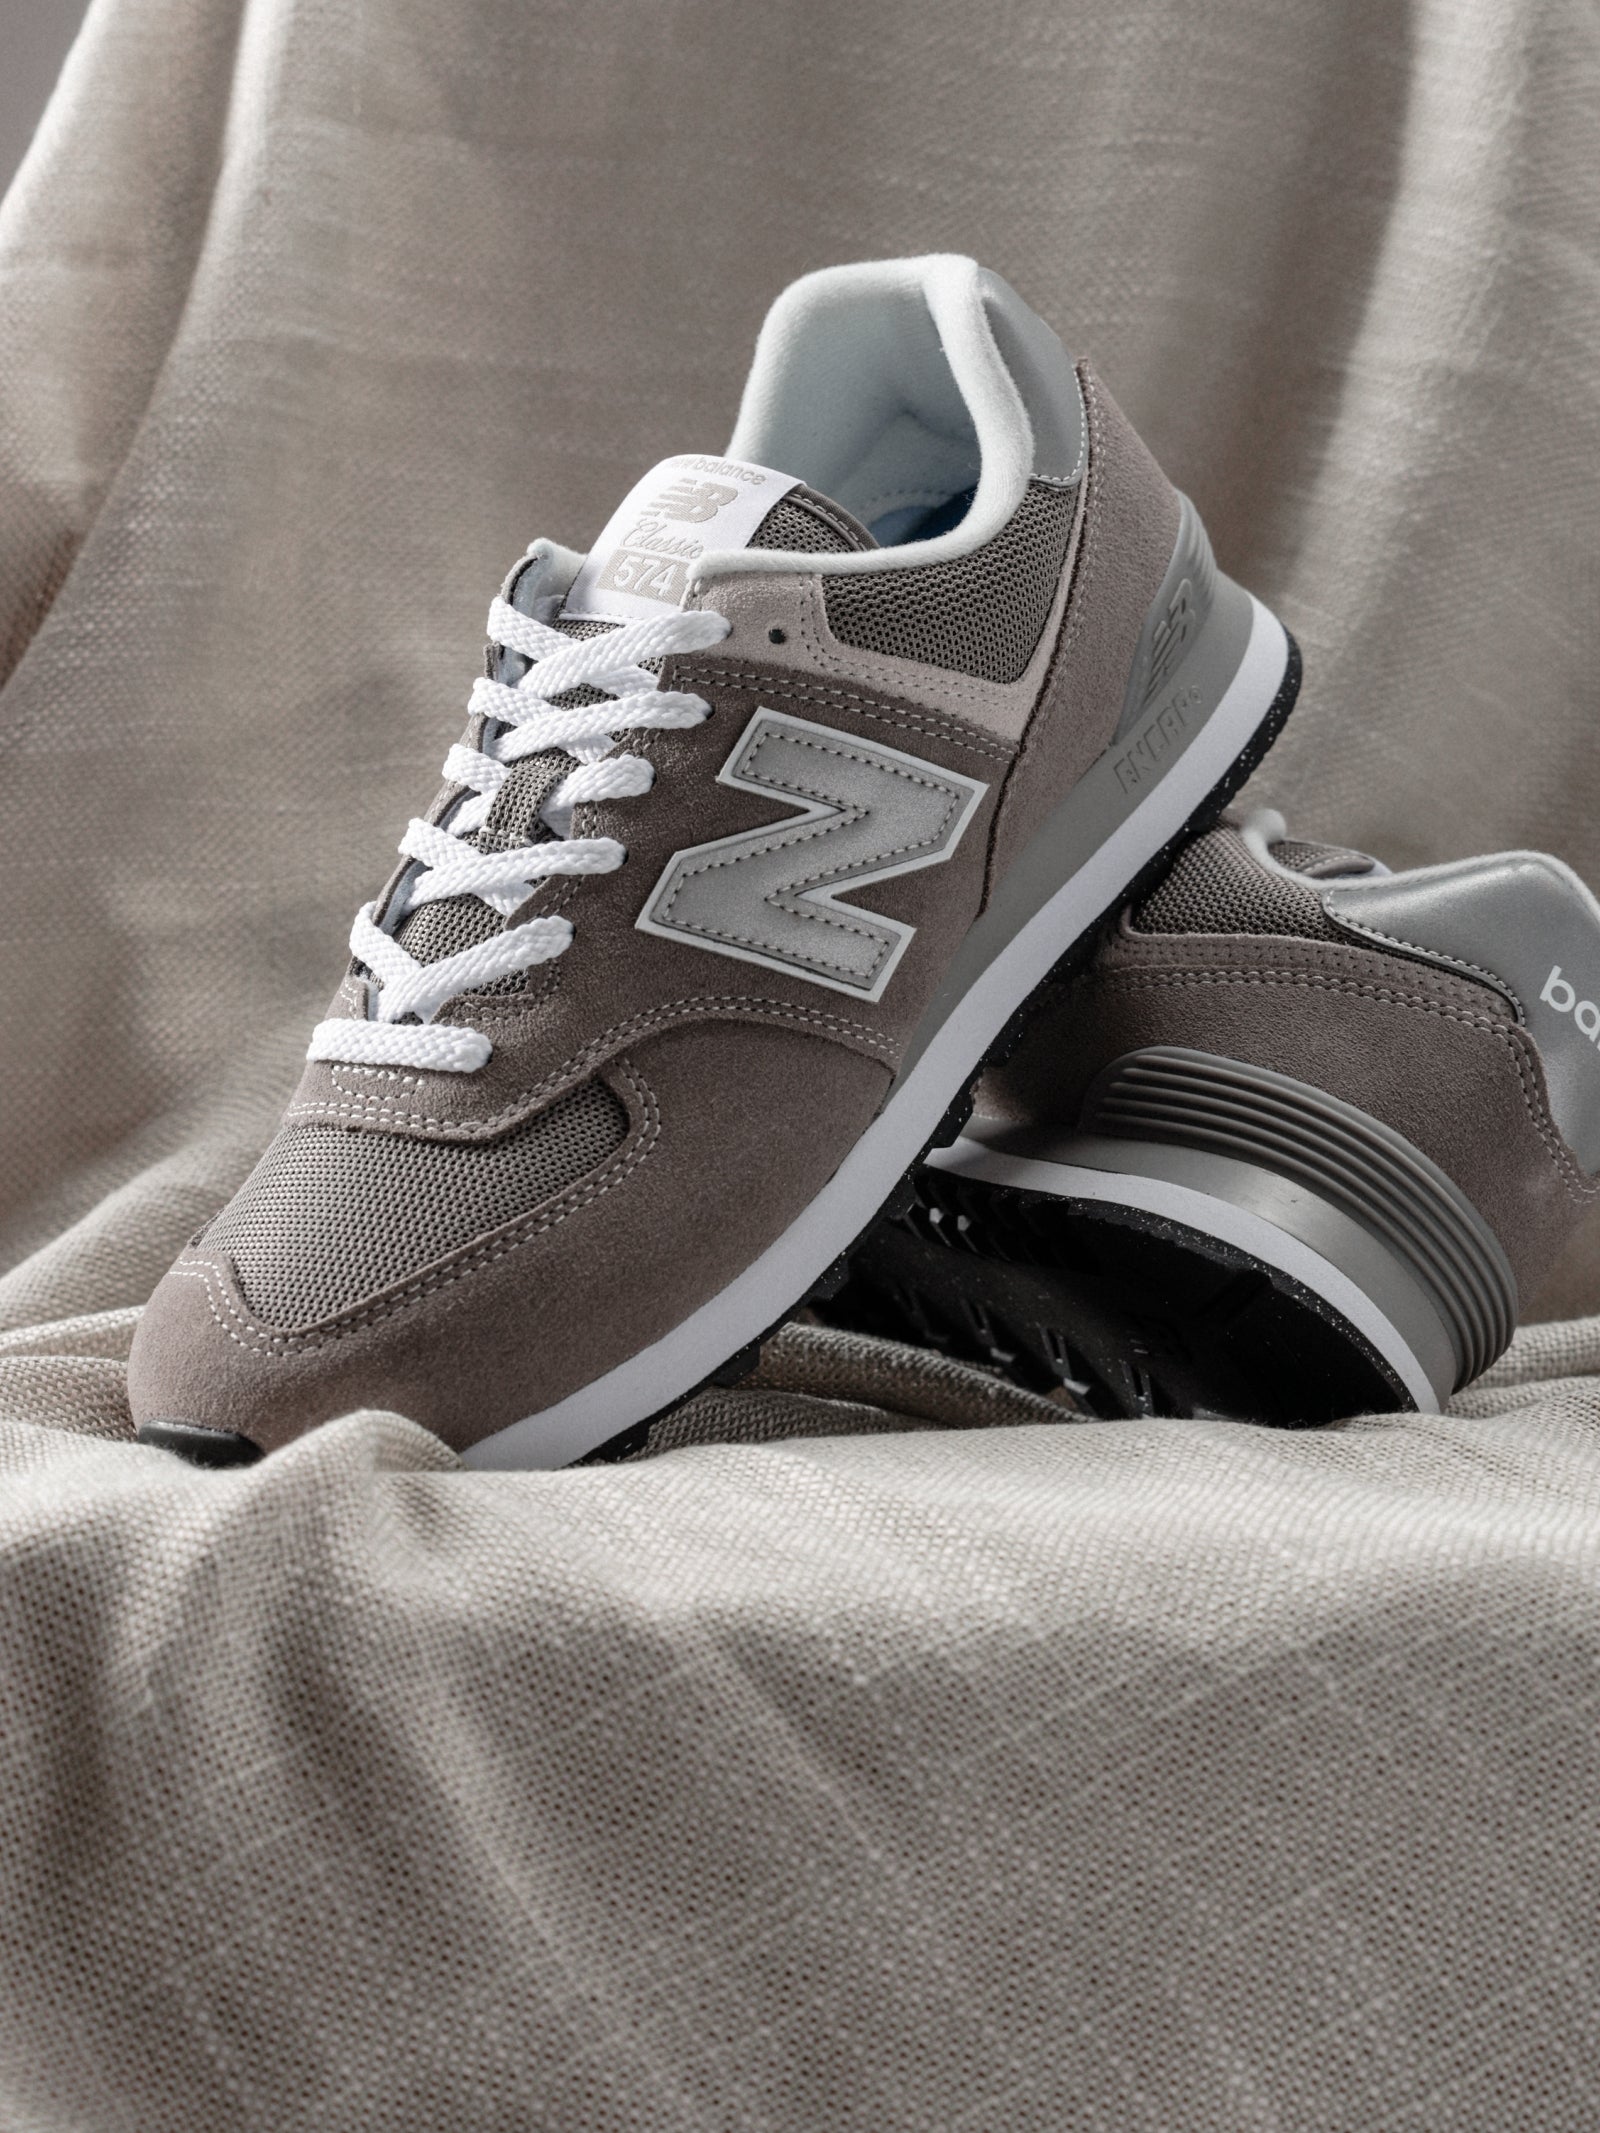 New Balance Men's 574 Classic Sneaker Shoes, Gray, 8 M US